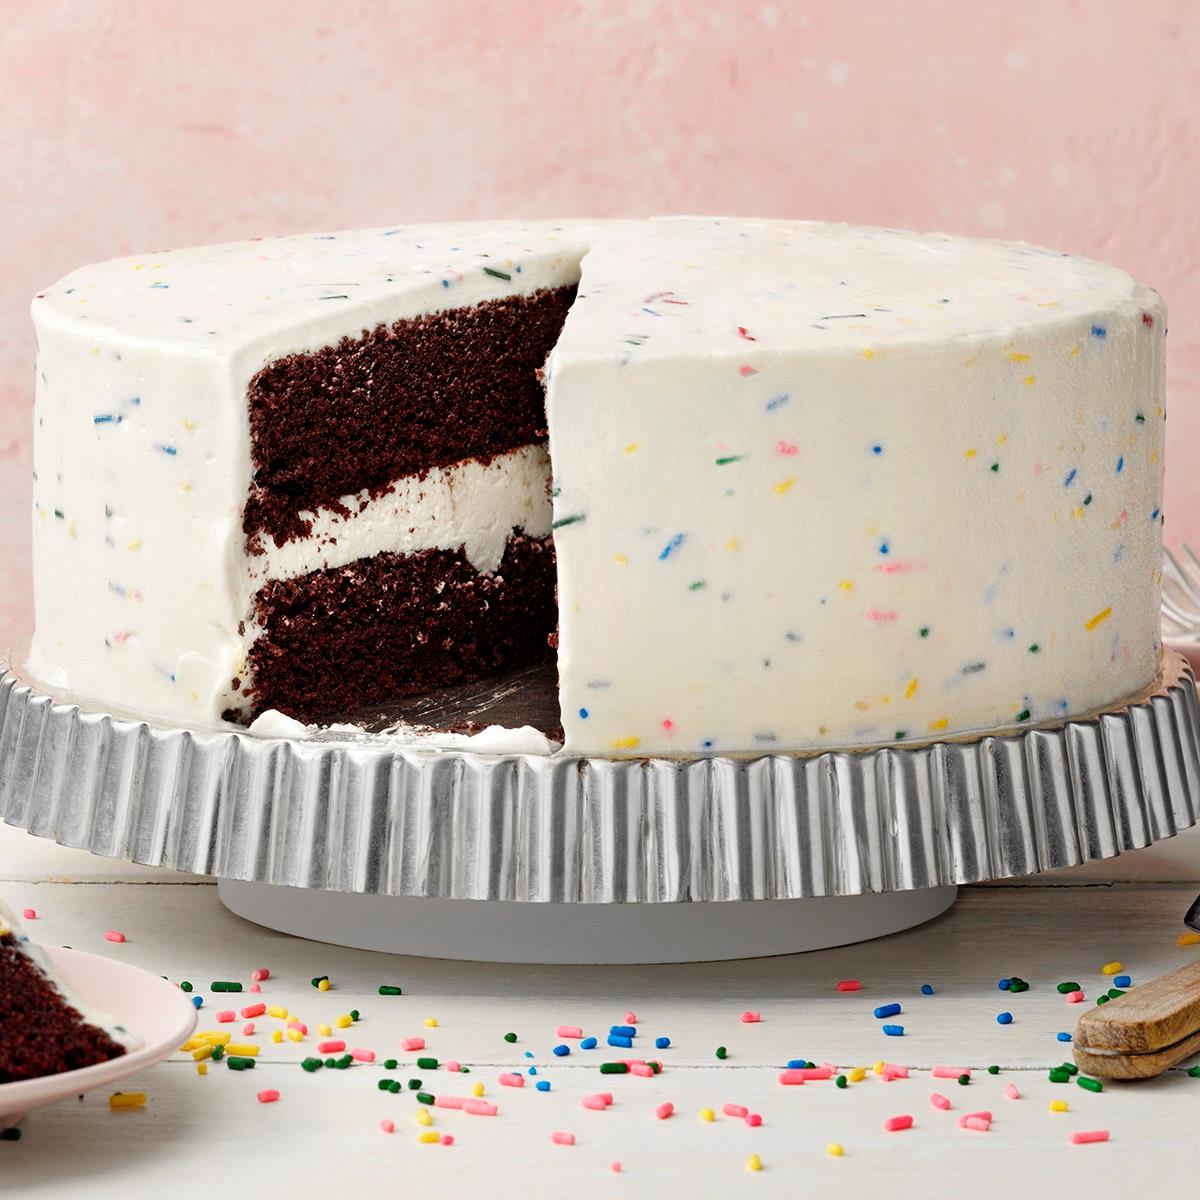 How to Make Cake at Home: Homemade Cake Recipe, Bake a Cake at Home & Cake  Ingredients